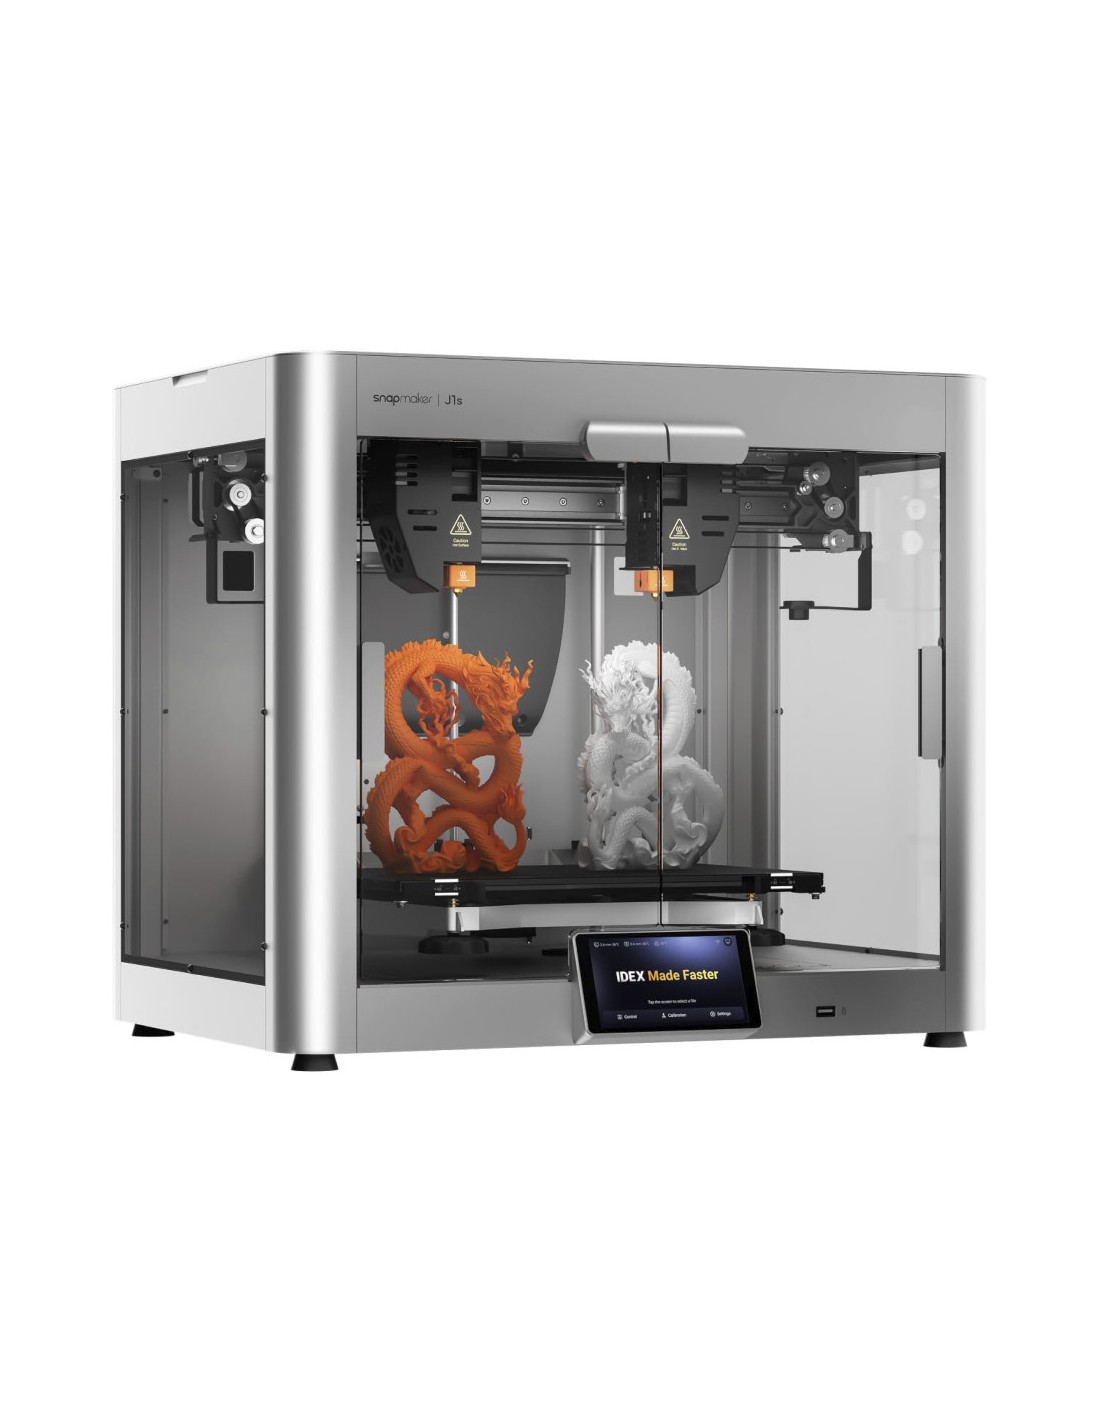 Snapmaker J1S - 3D printer